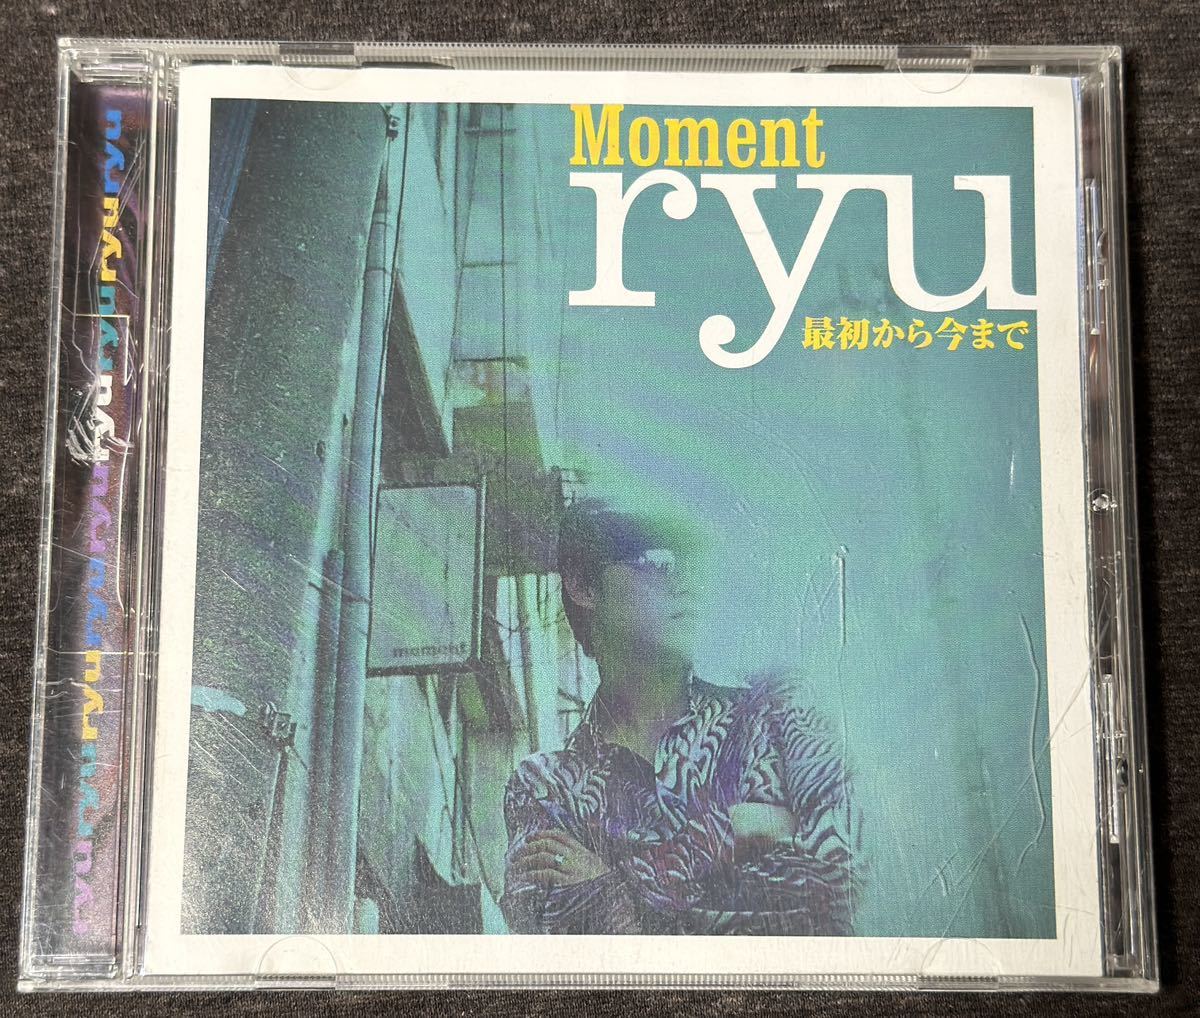 Ryu Moment / 最初から今まで　03.12.10